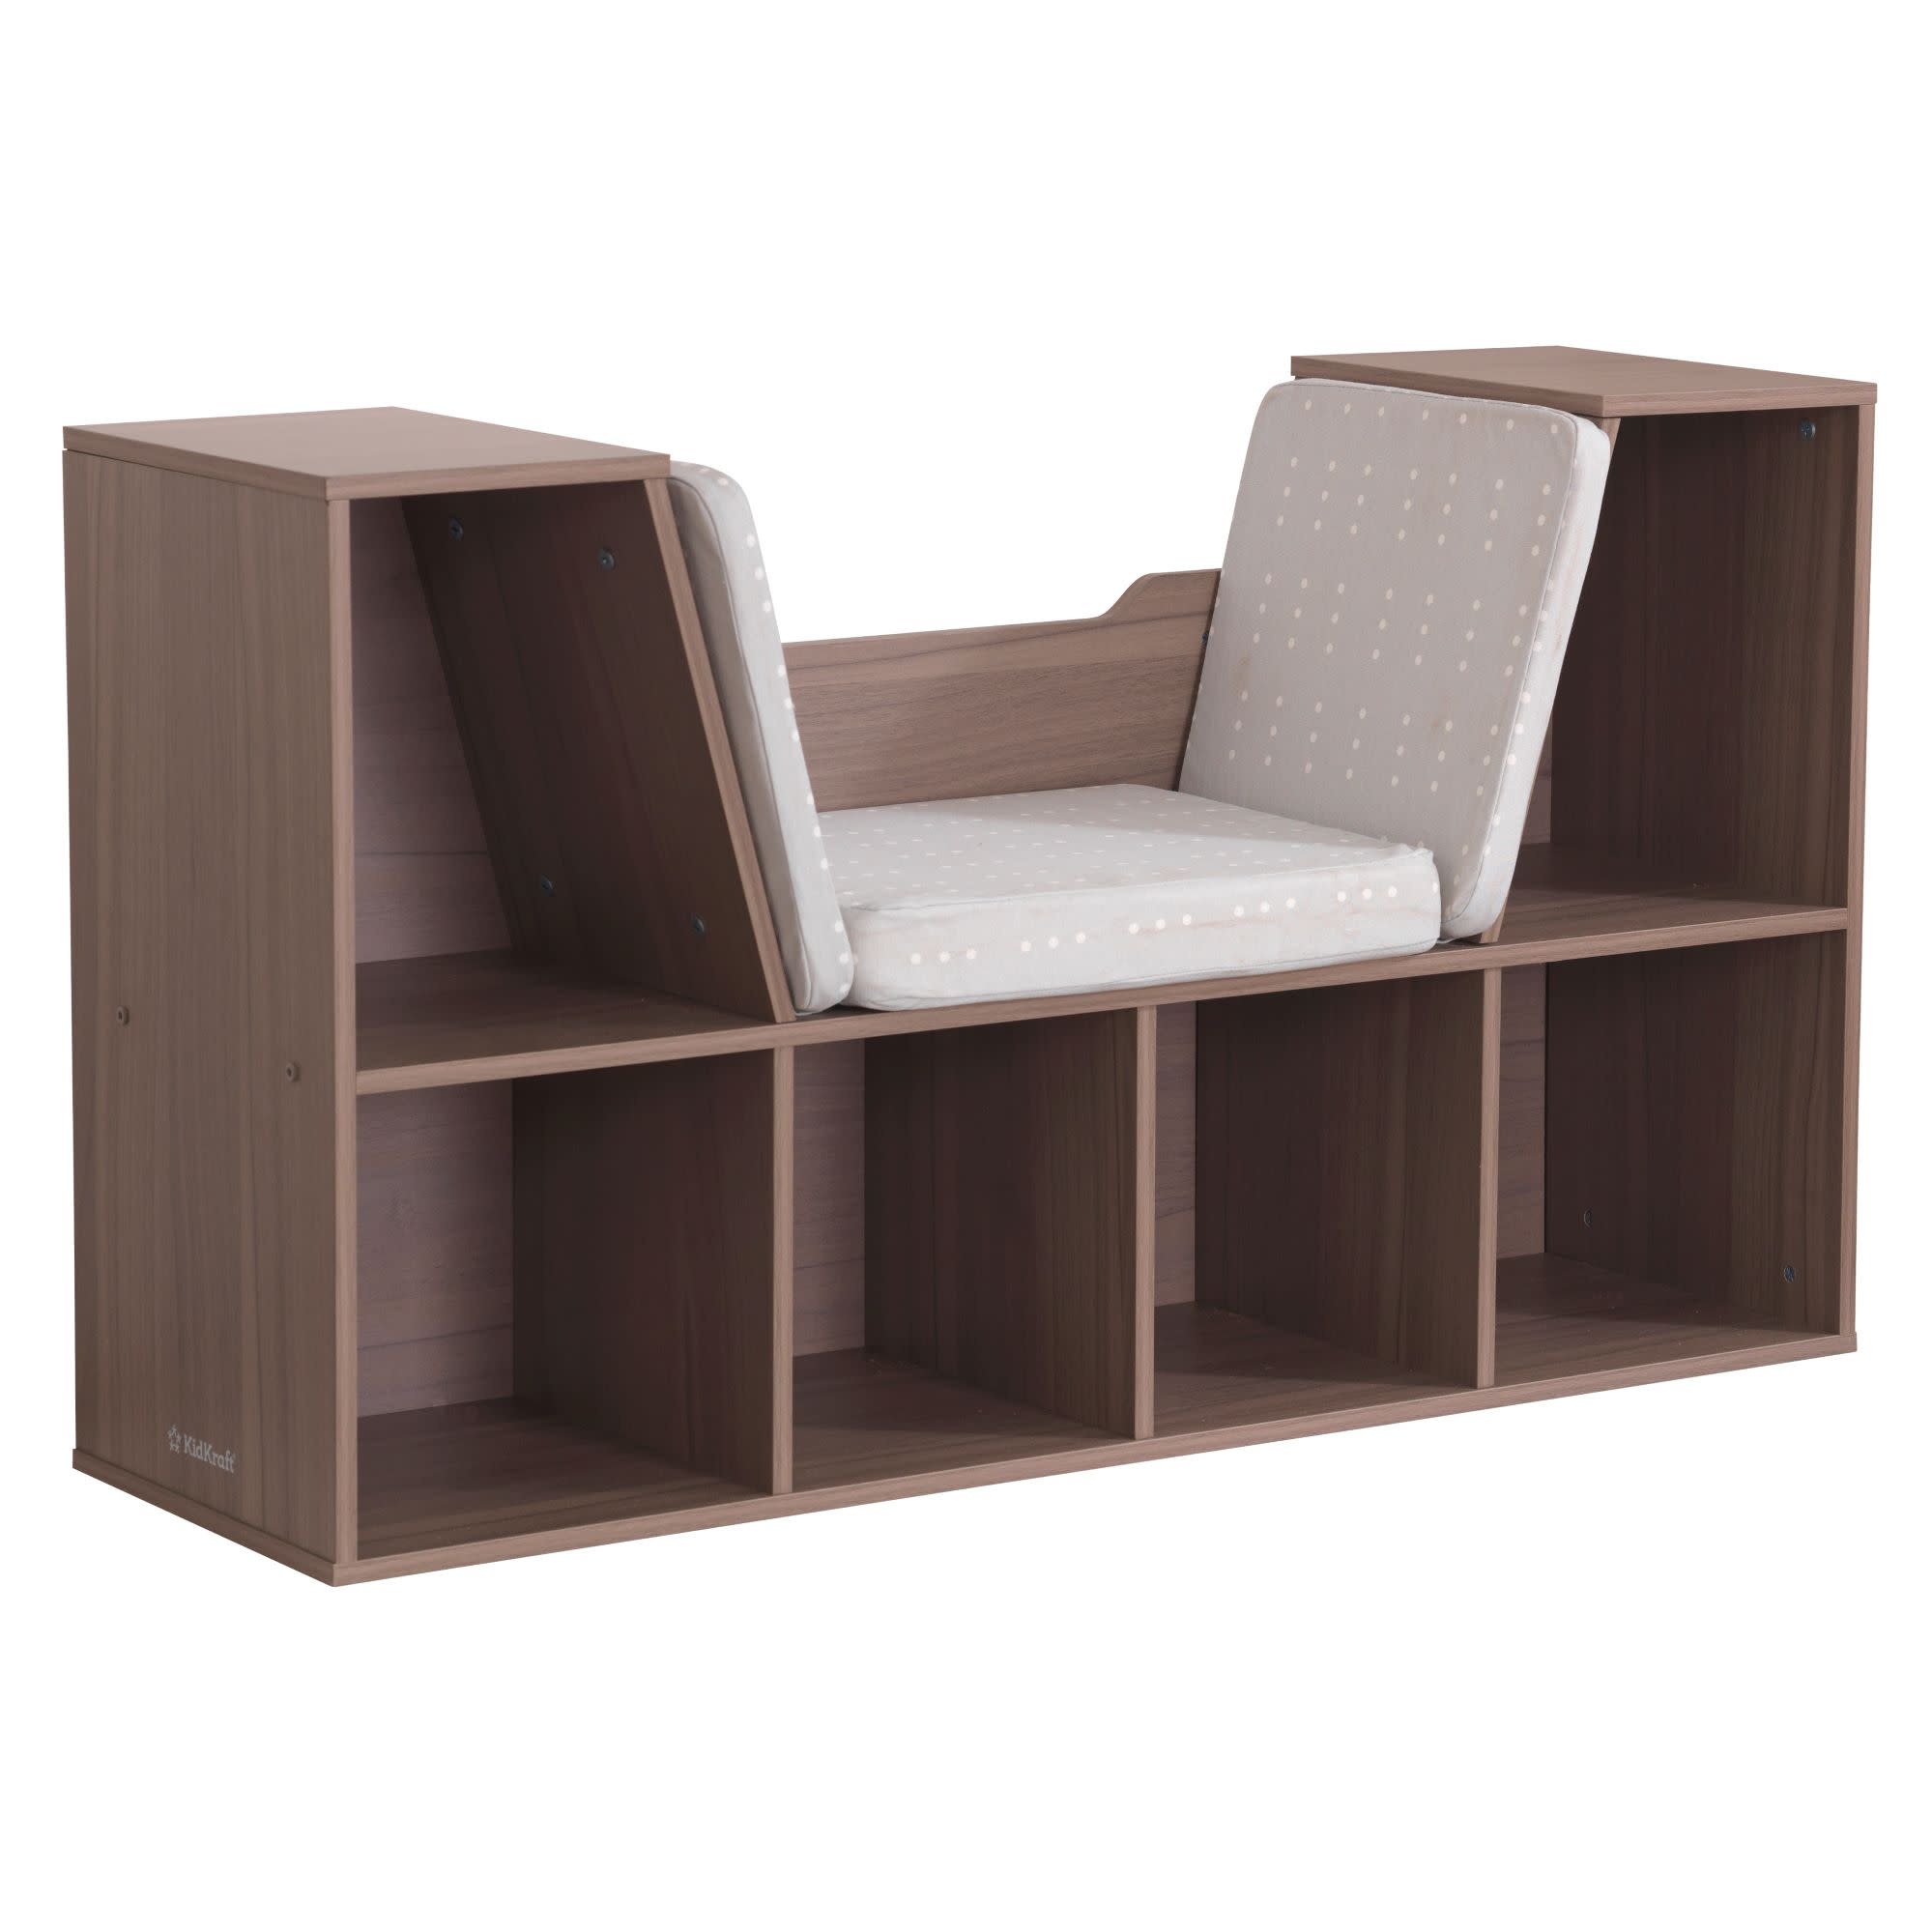 KidKraft 6-Shelf Wooden Bookcase w/ Reading Nook: Gray $70, Mint $73+ Free Shipping